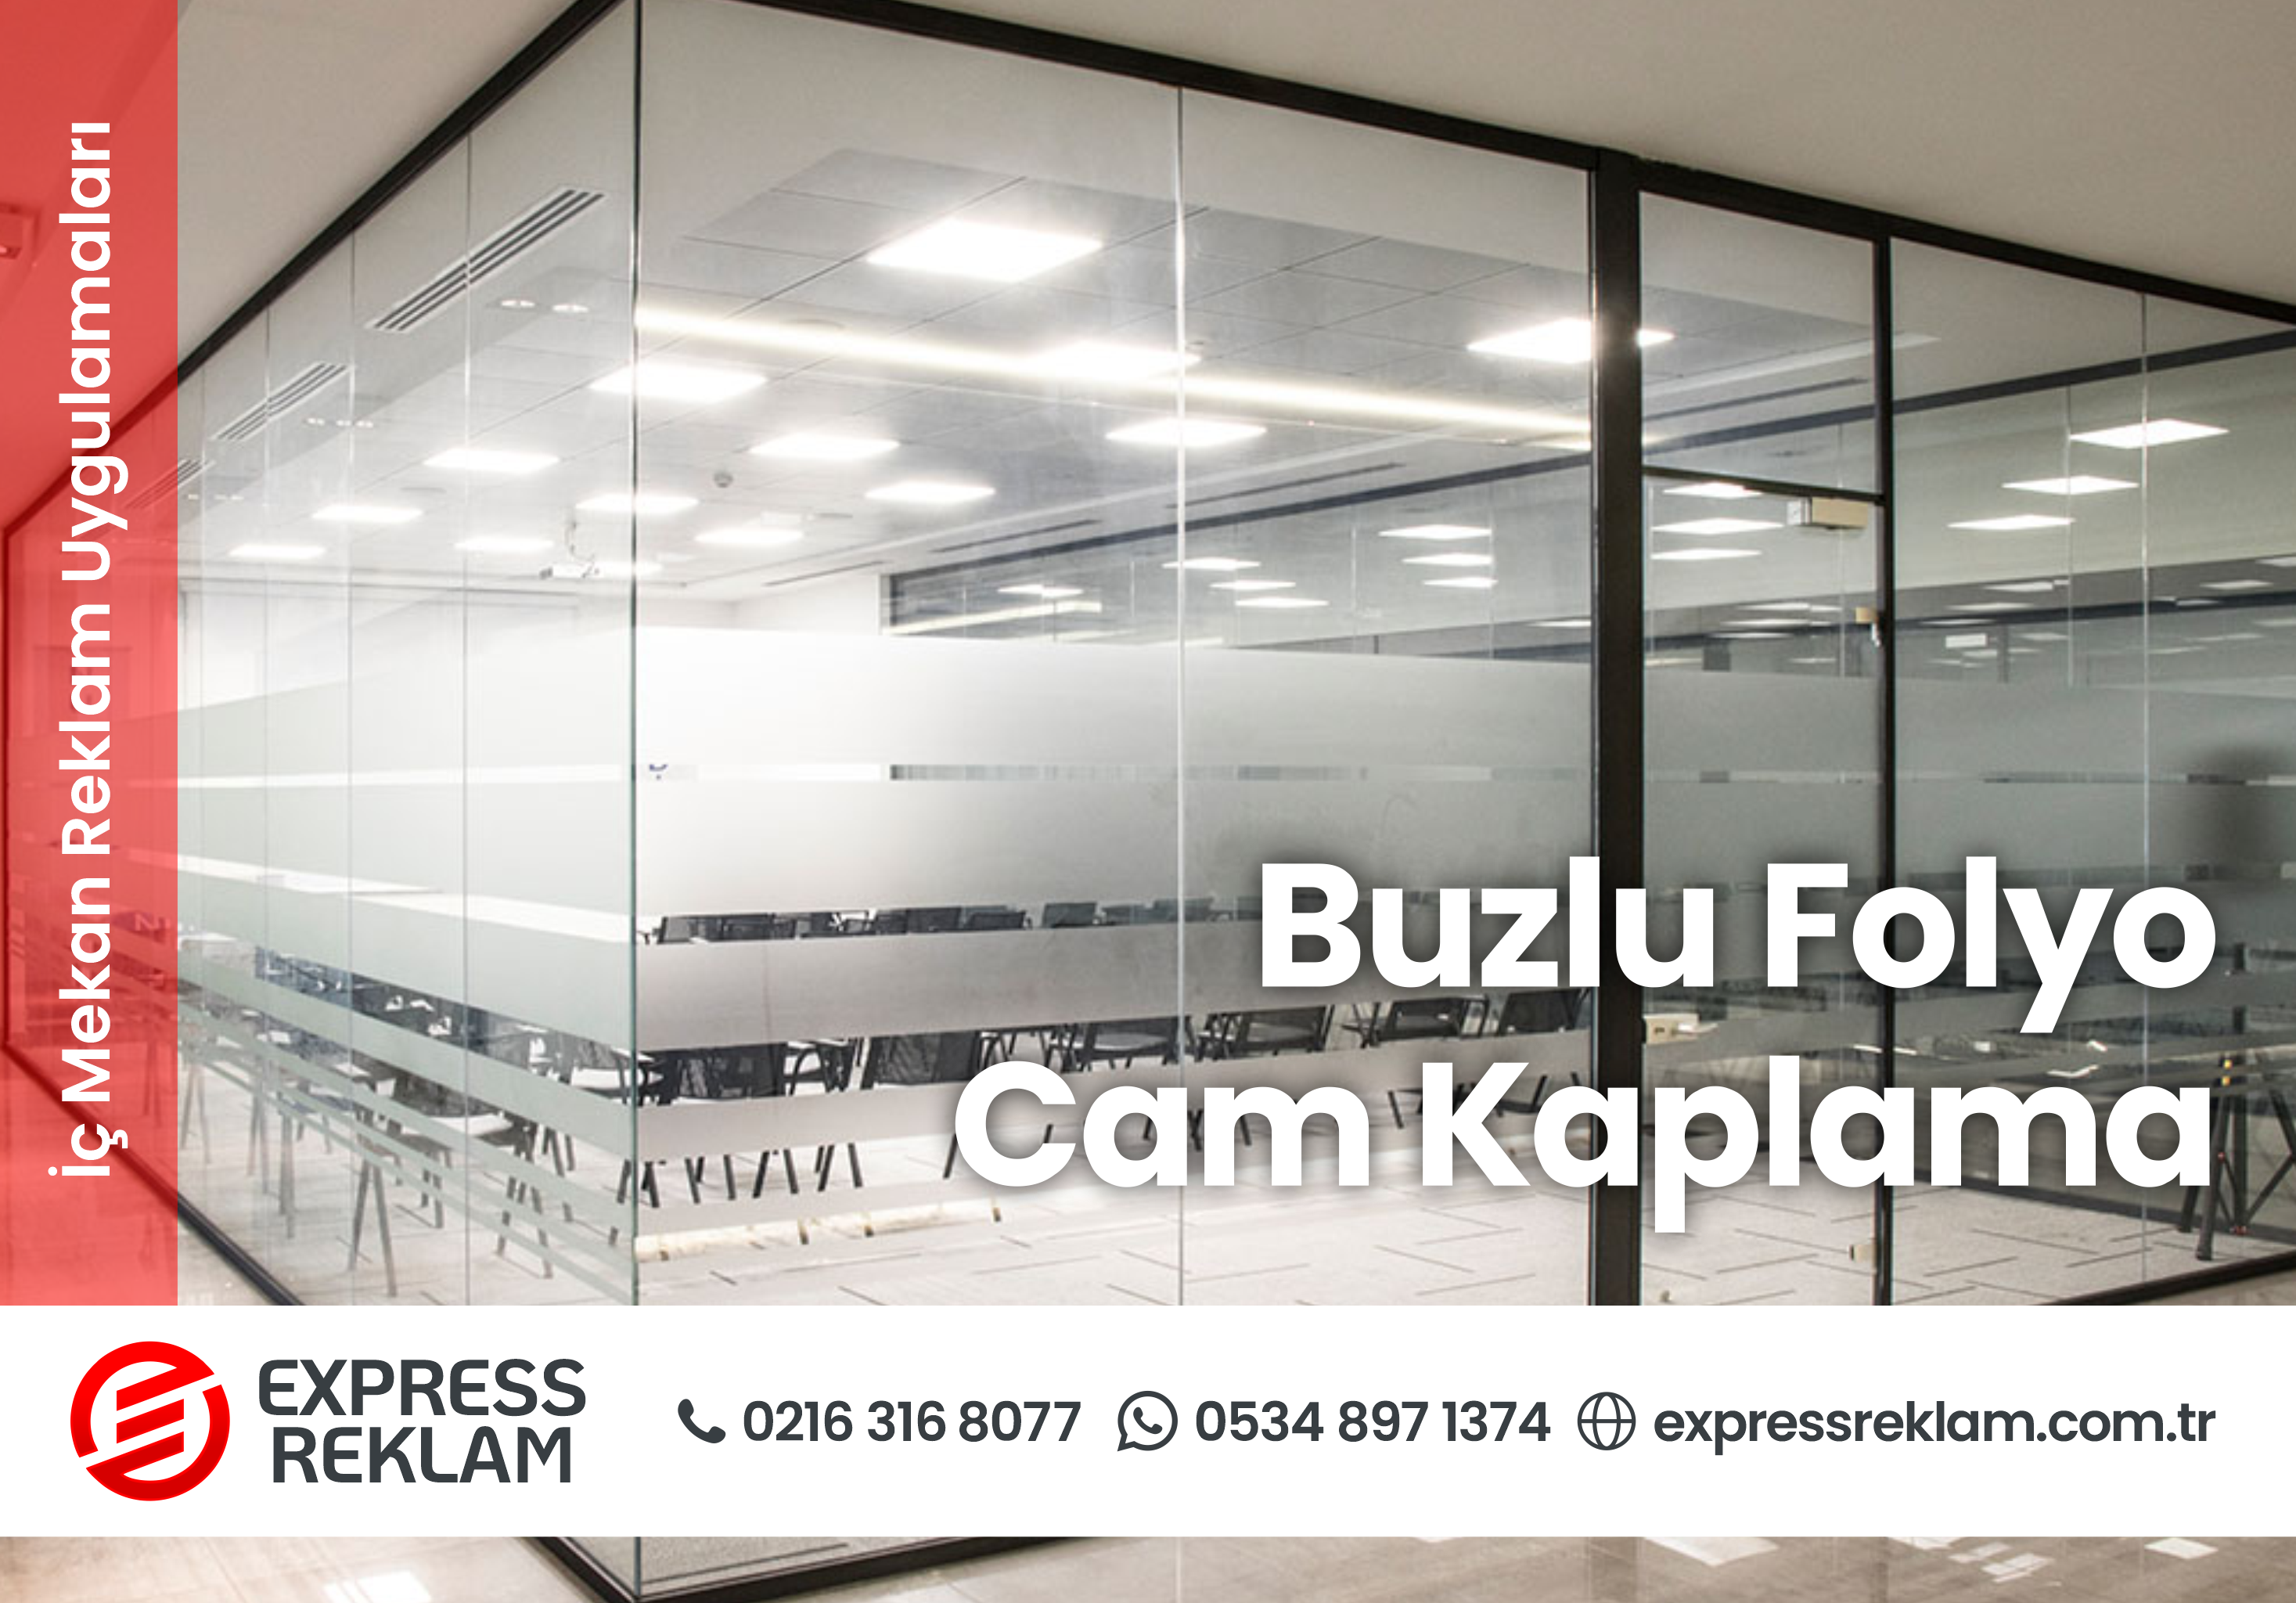 You are currently viewing Buzlu Folyo Cam Kaplama